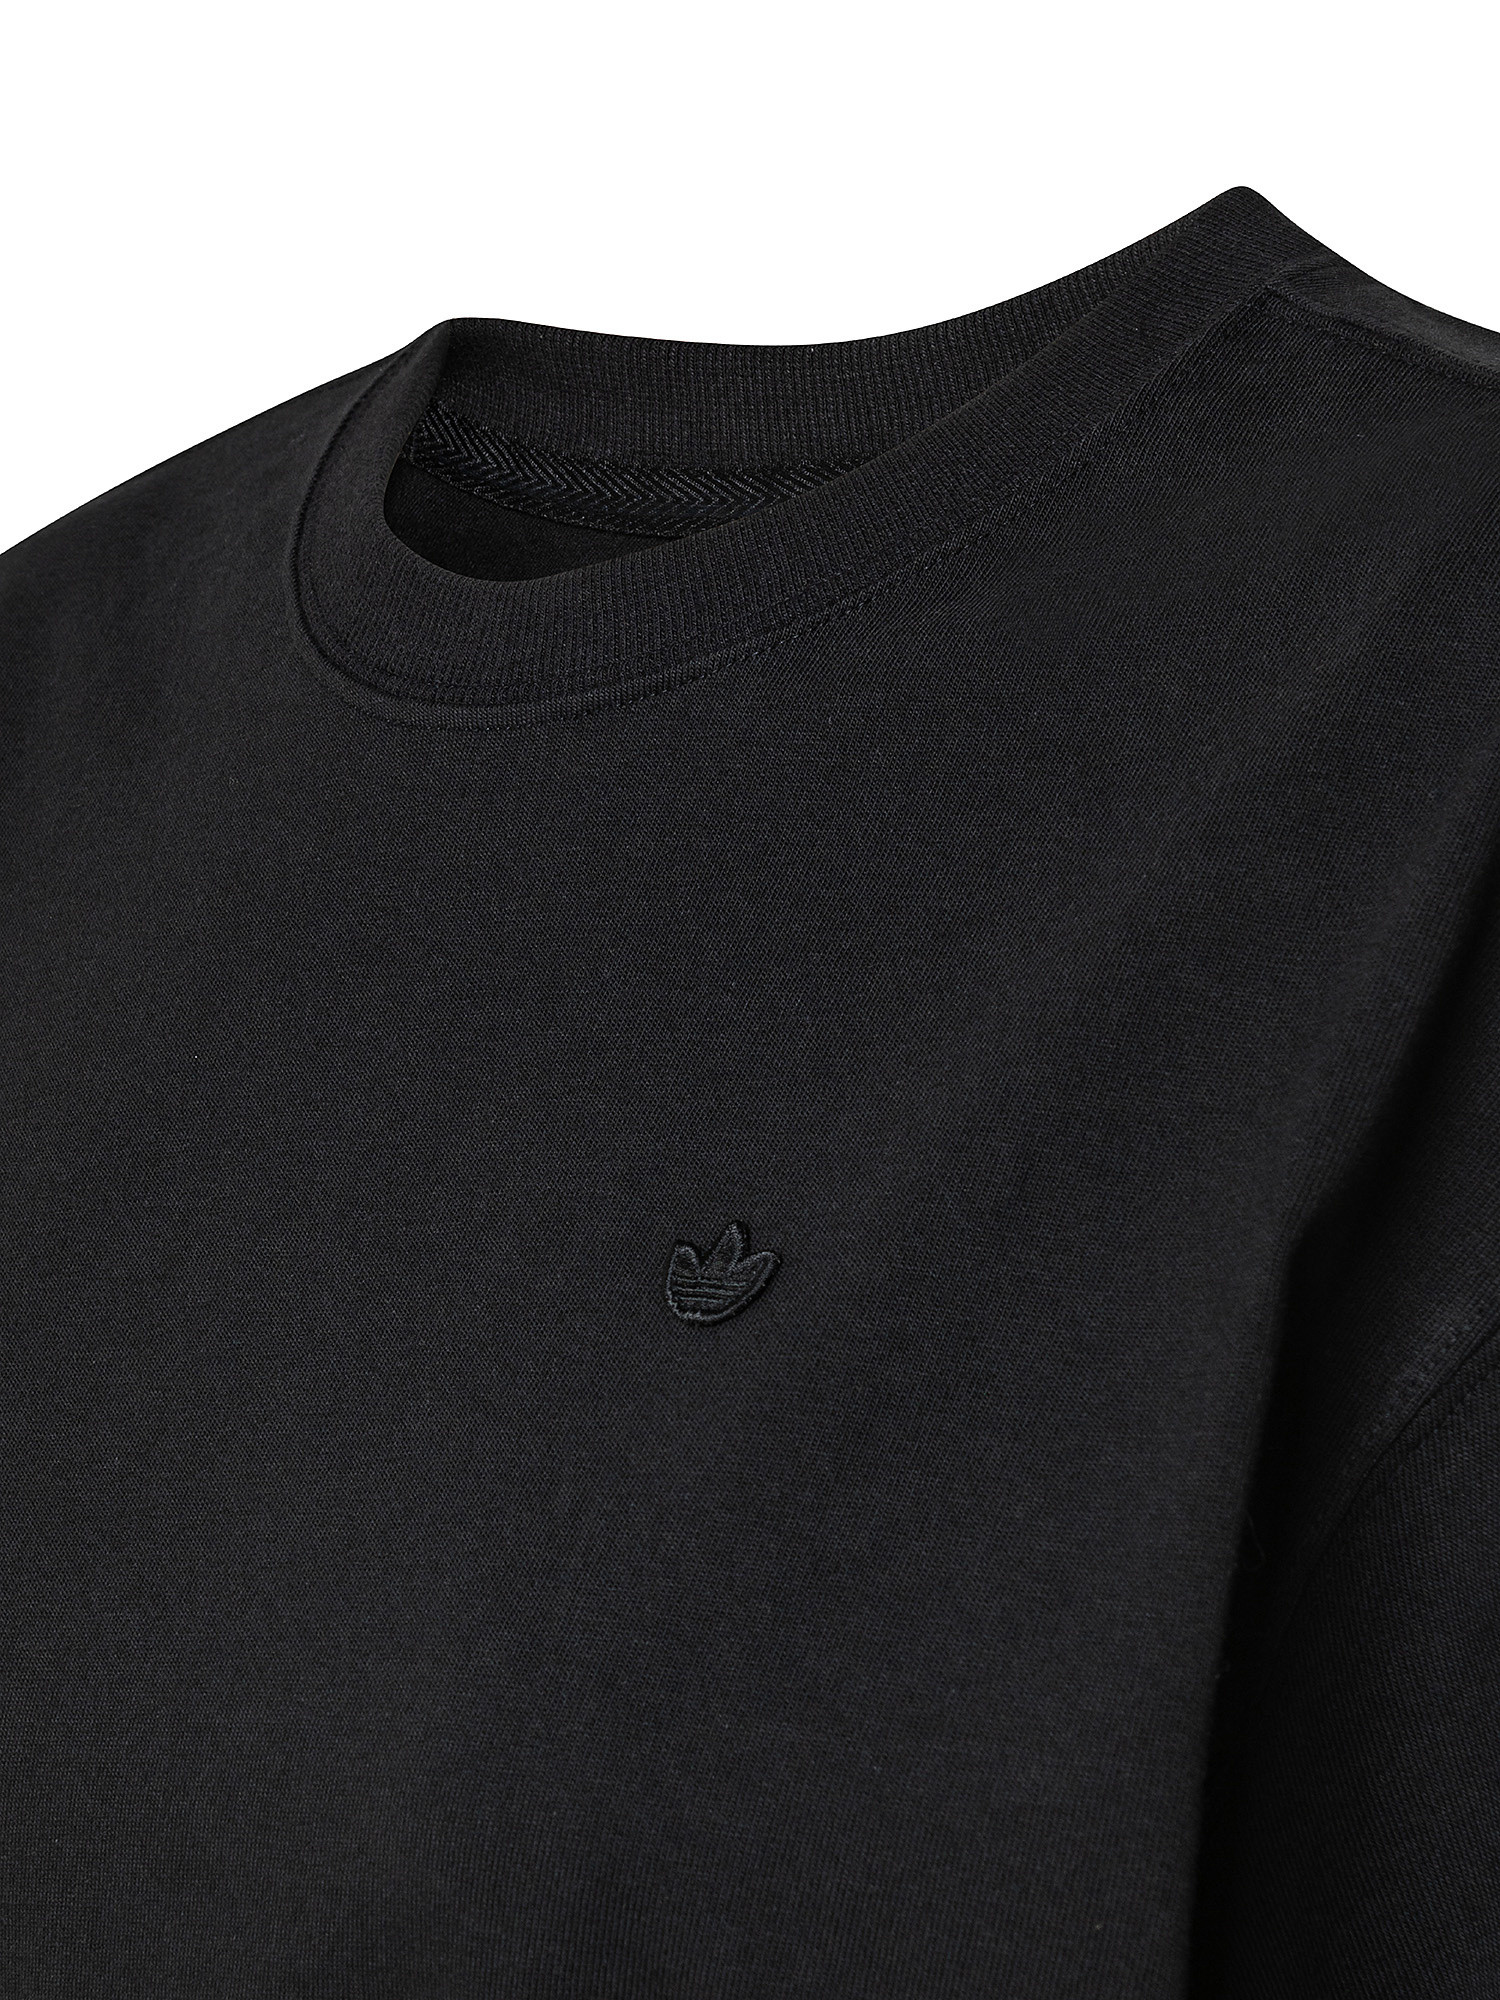 Adidas - T-shirt adicolor, Black, large image number 2